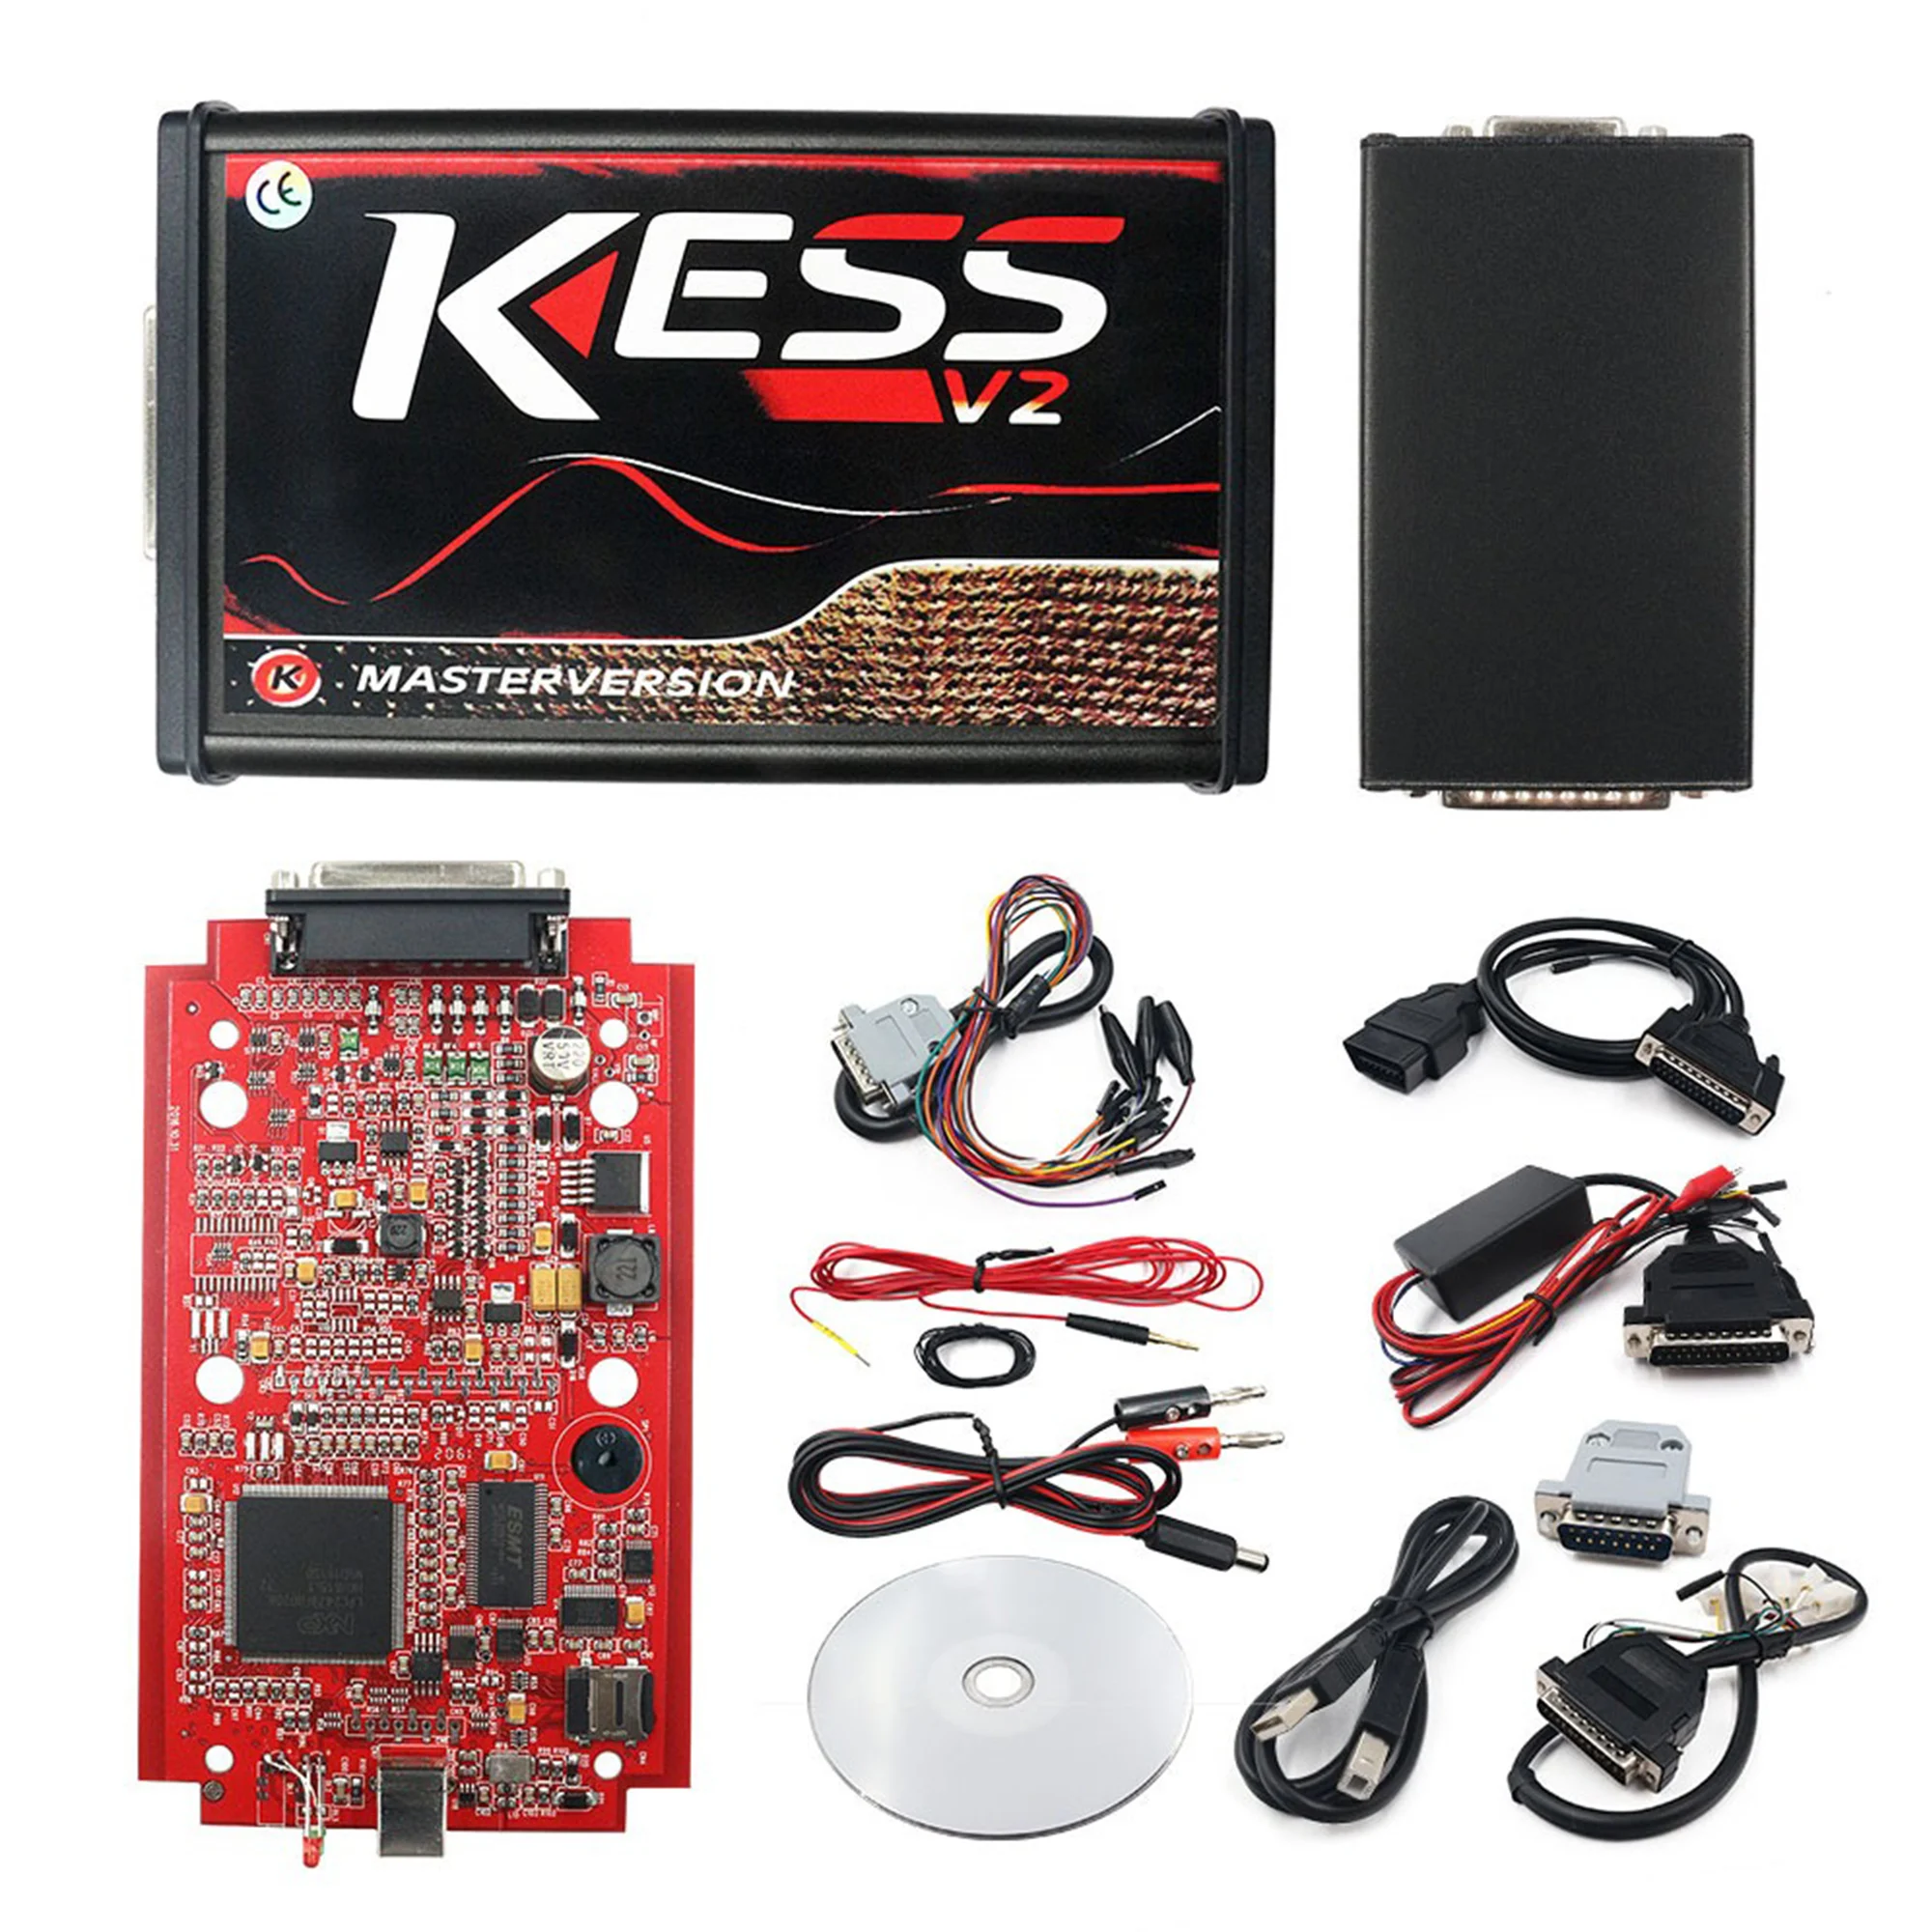 

Kess V2 V5.017 Online Version Red PCB Support 140 Protocol No Token Limitation Kess V2 OBD2 Tuning Kit Auto Truck ECU Programmer